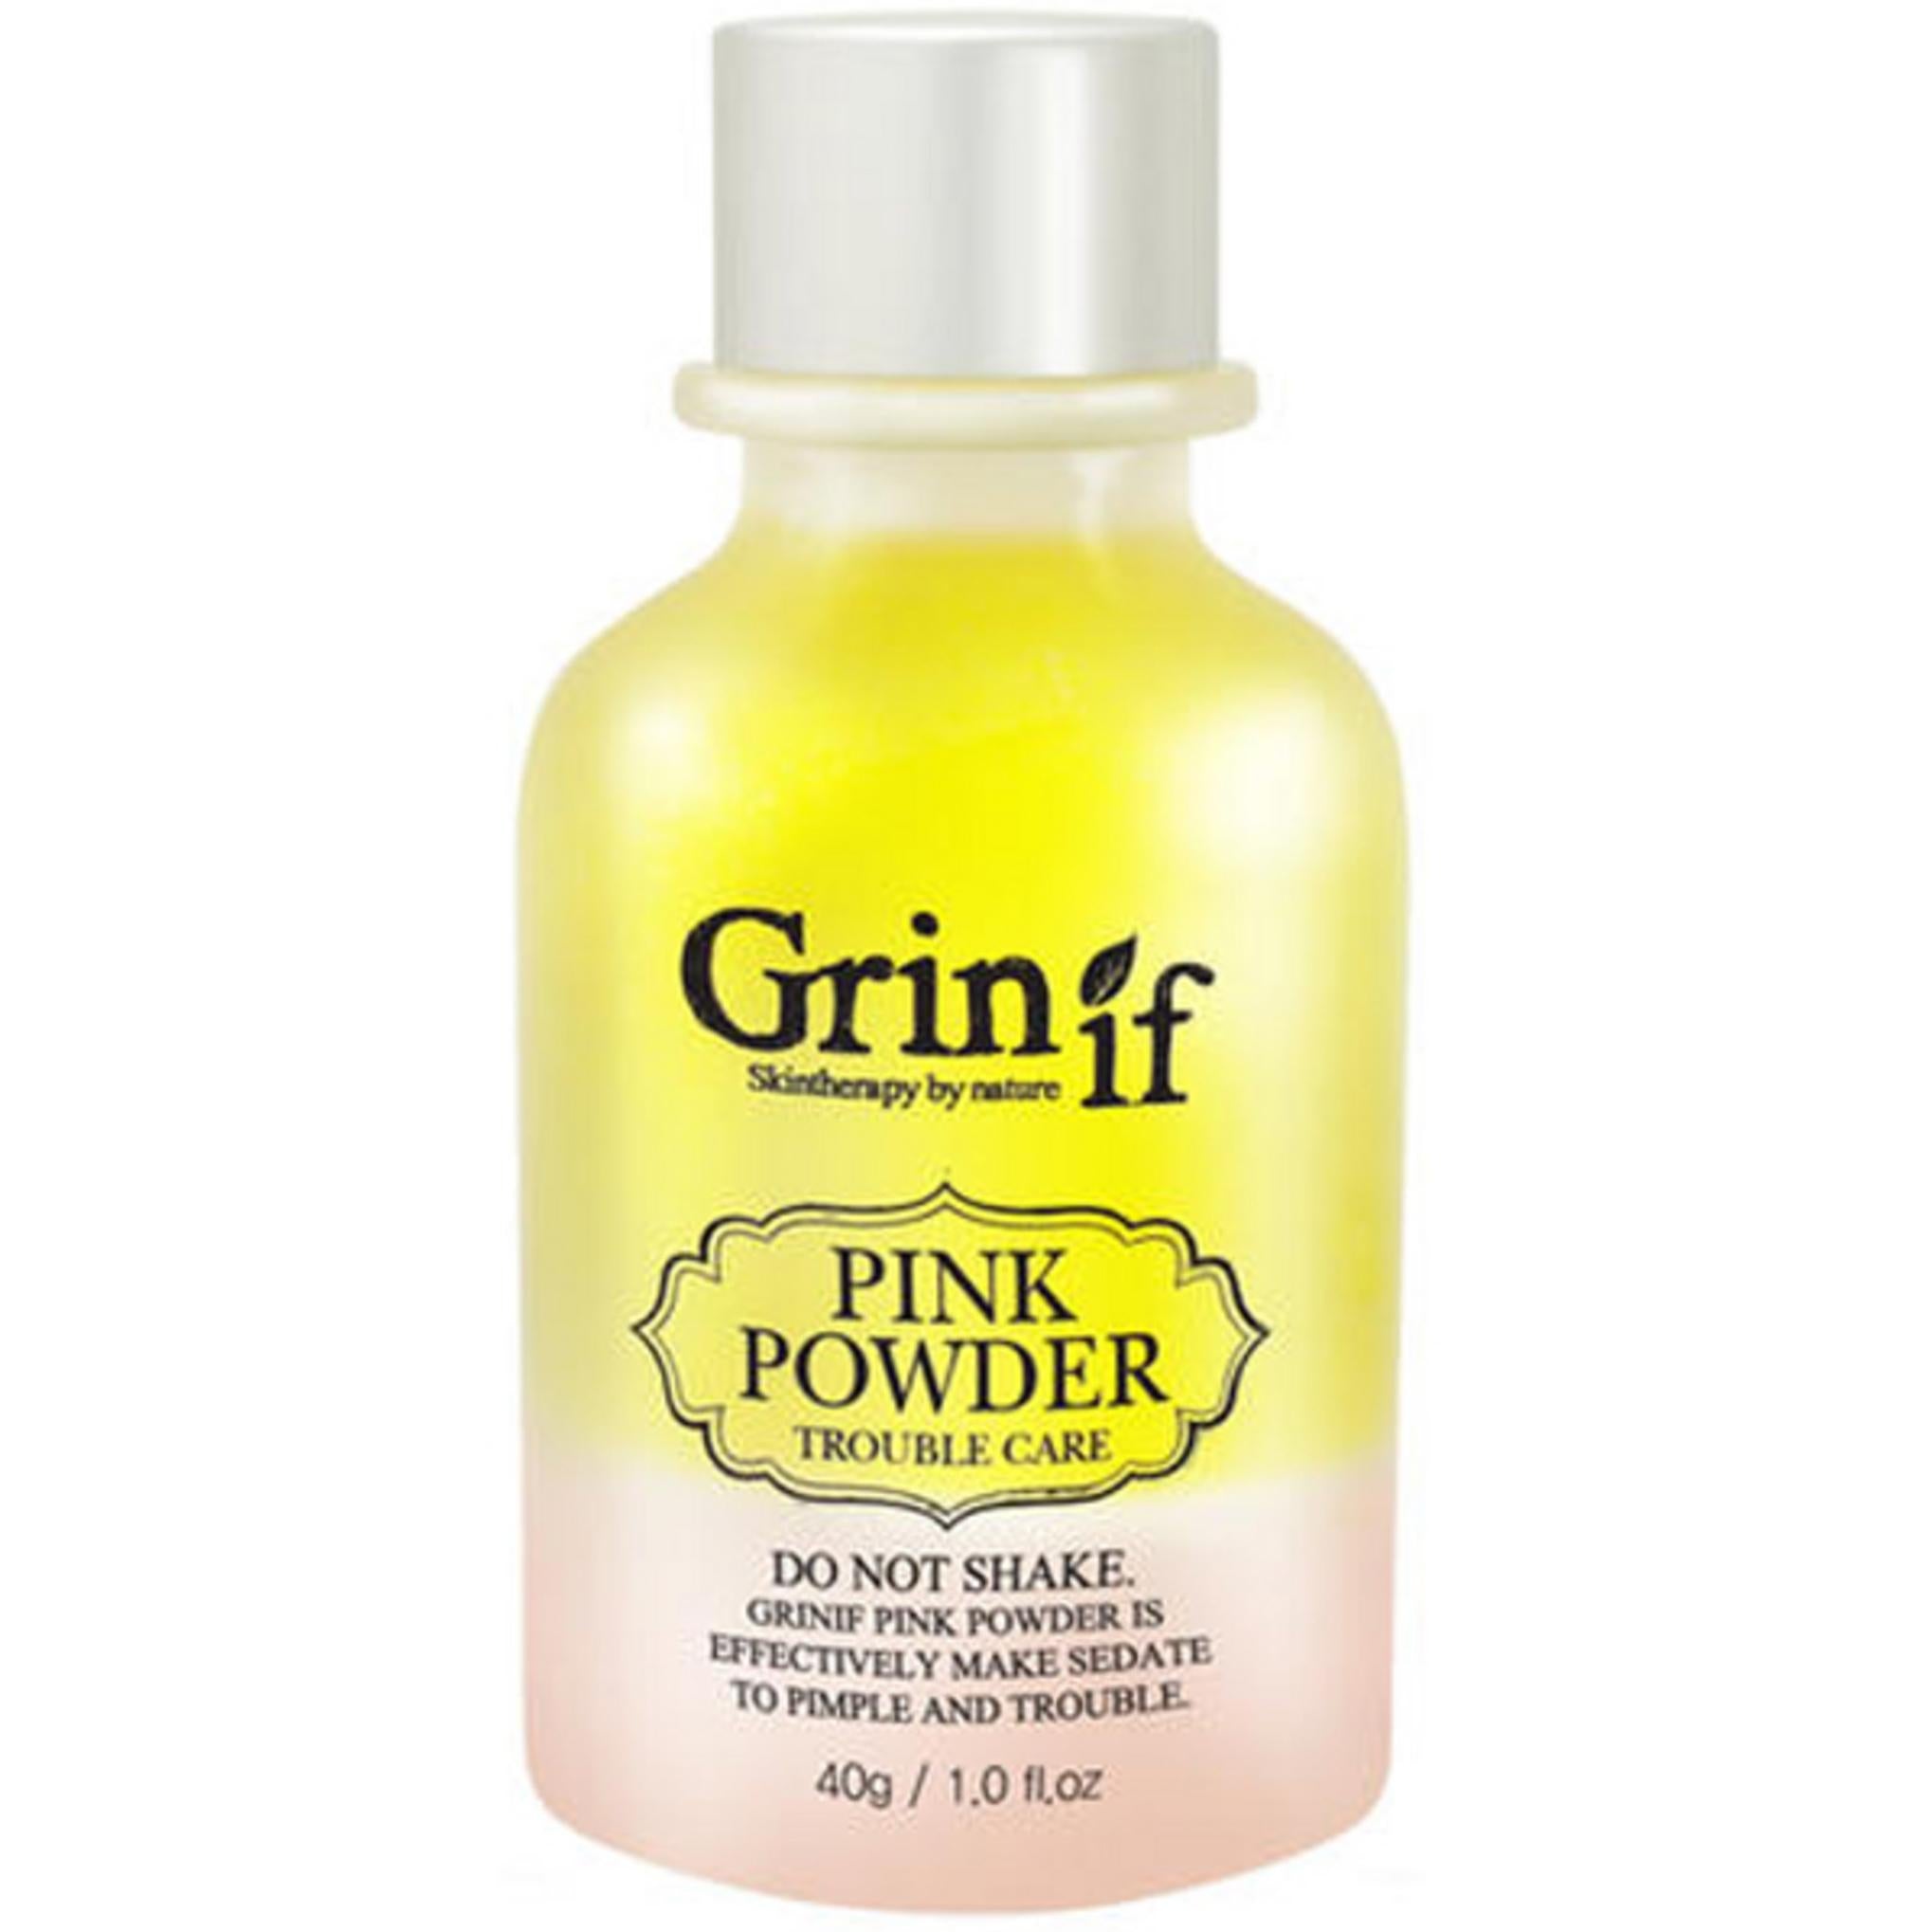 Greenif Pink Powder Trouble Care Essence